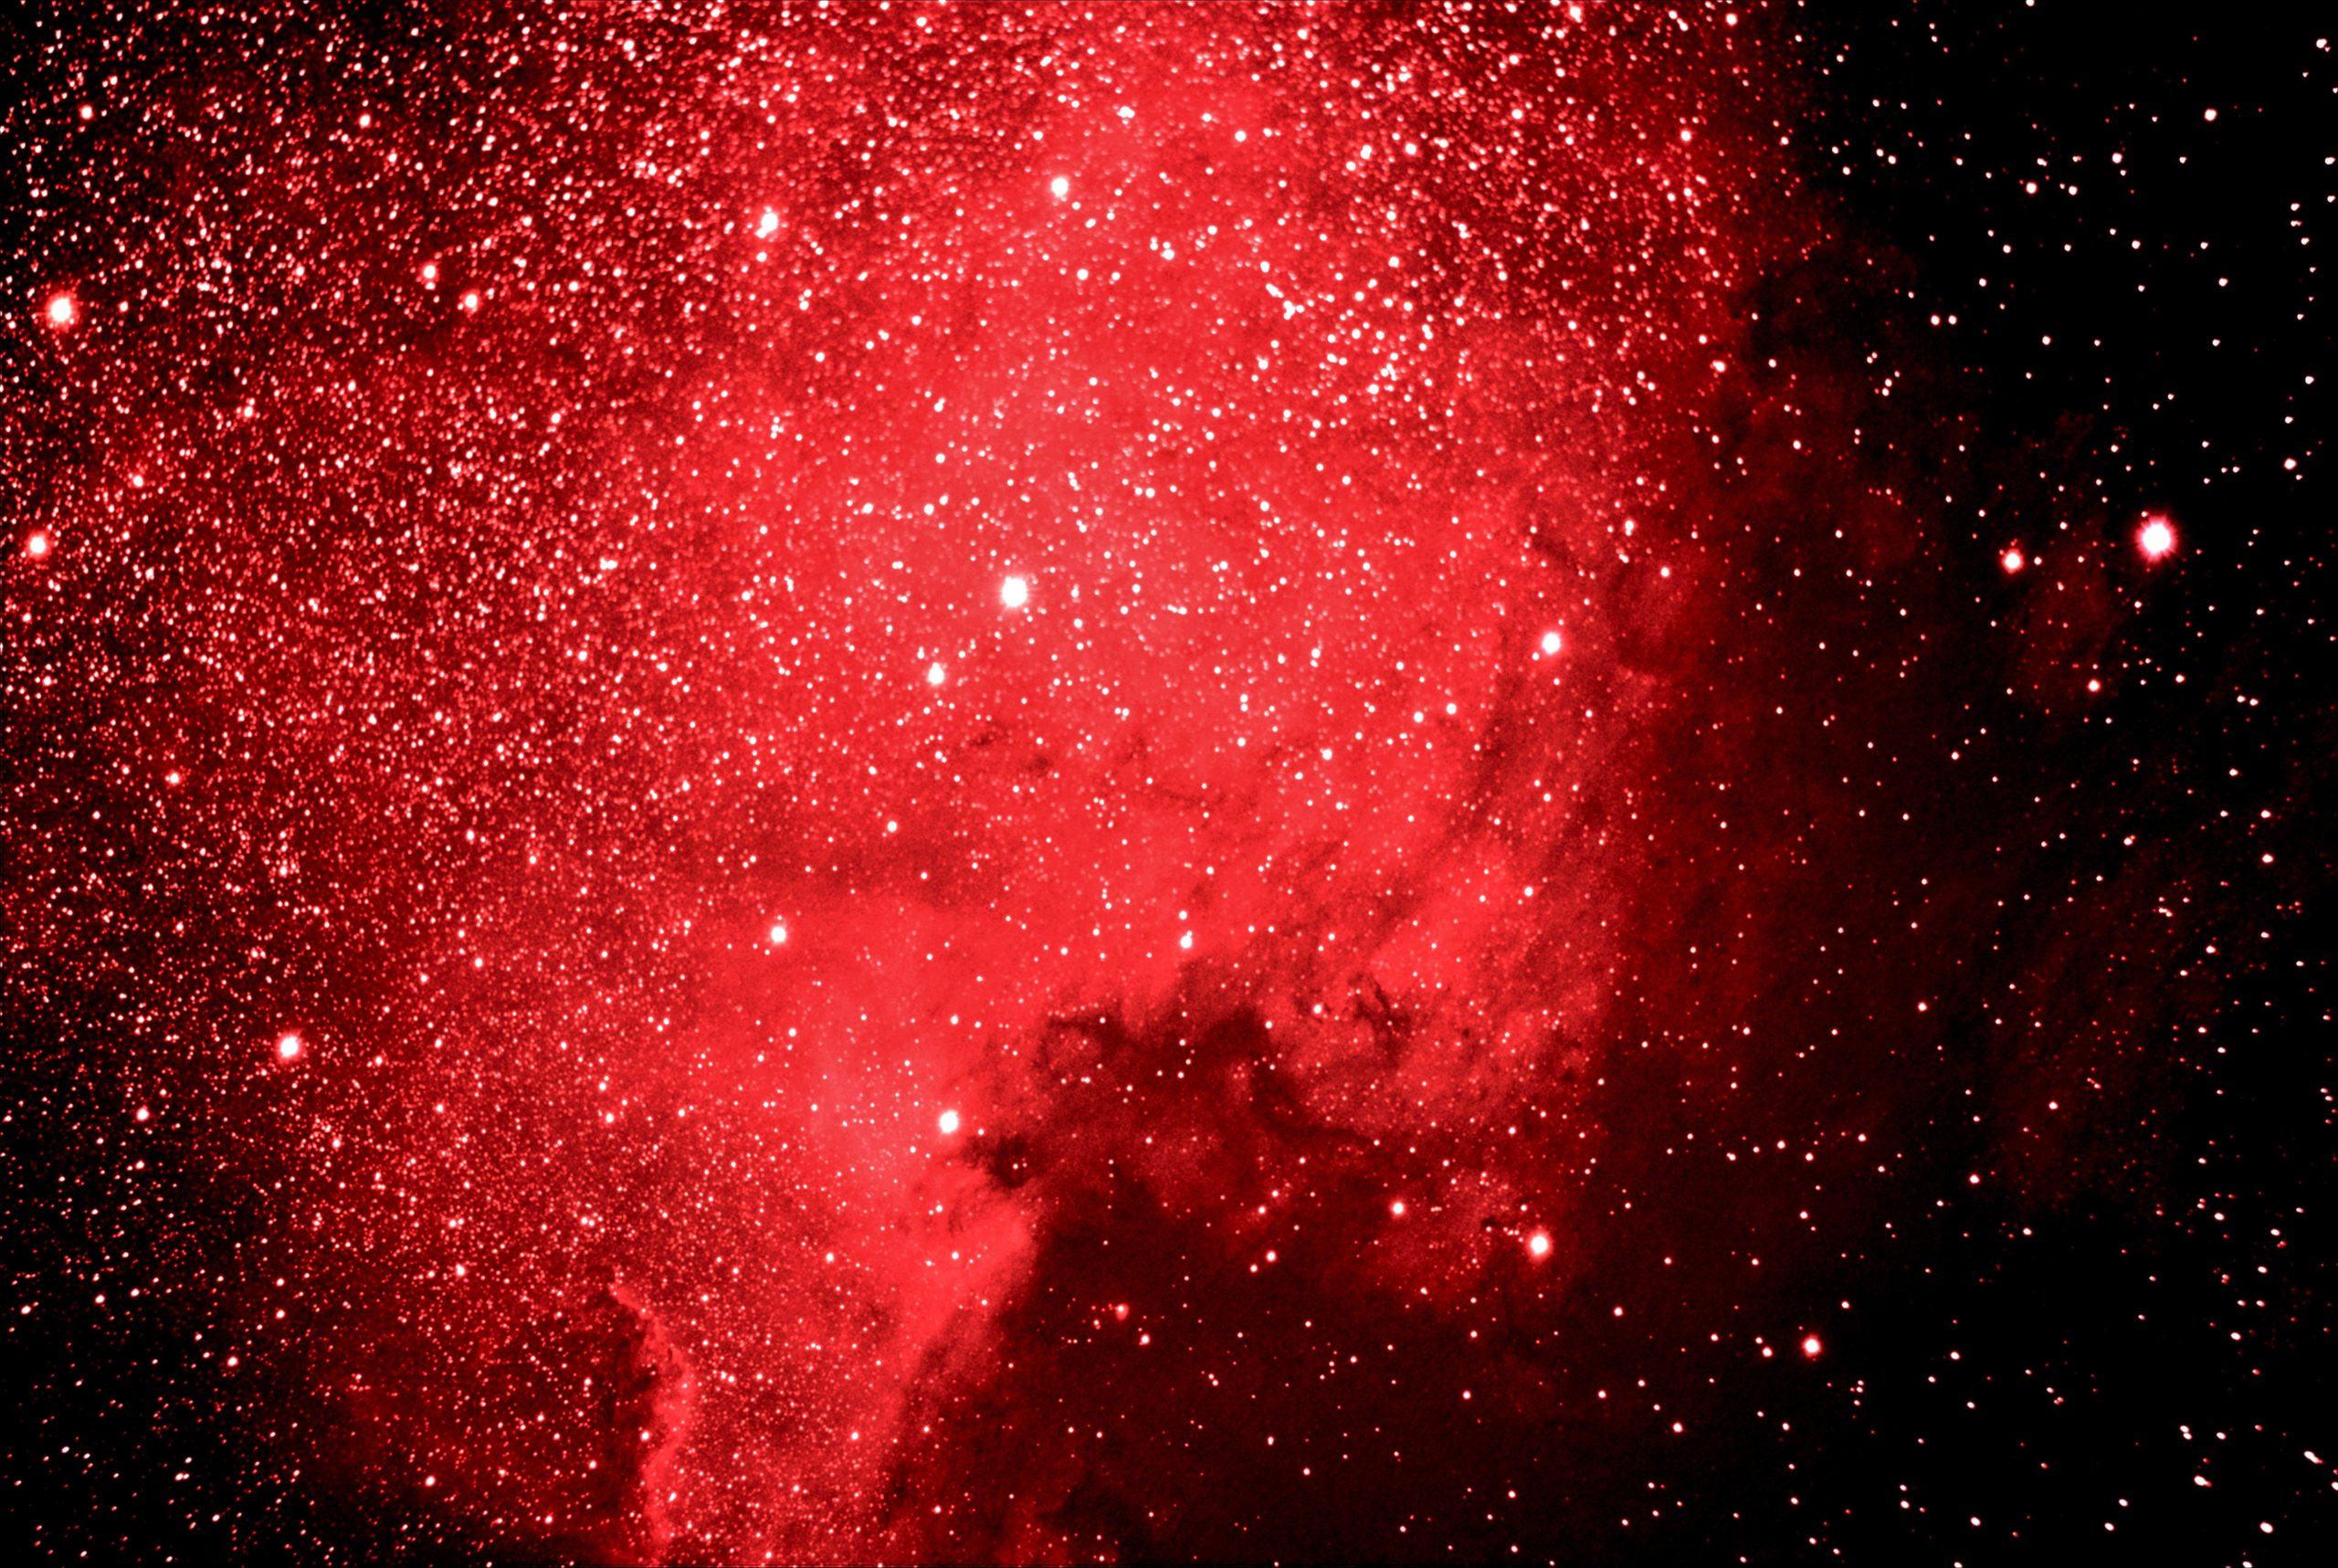 North America Nebula (NGC 7000 or Caldwell 20)